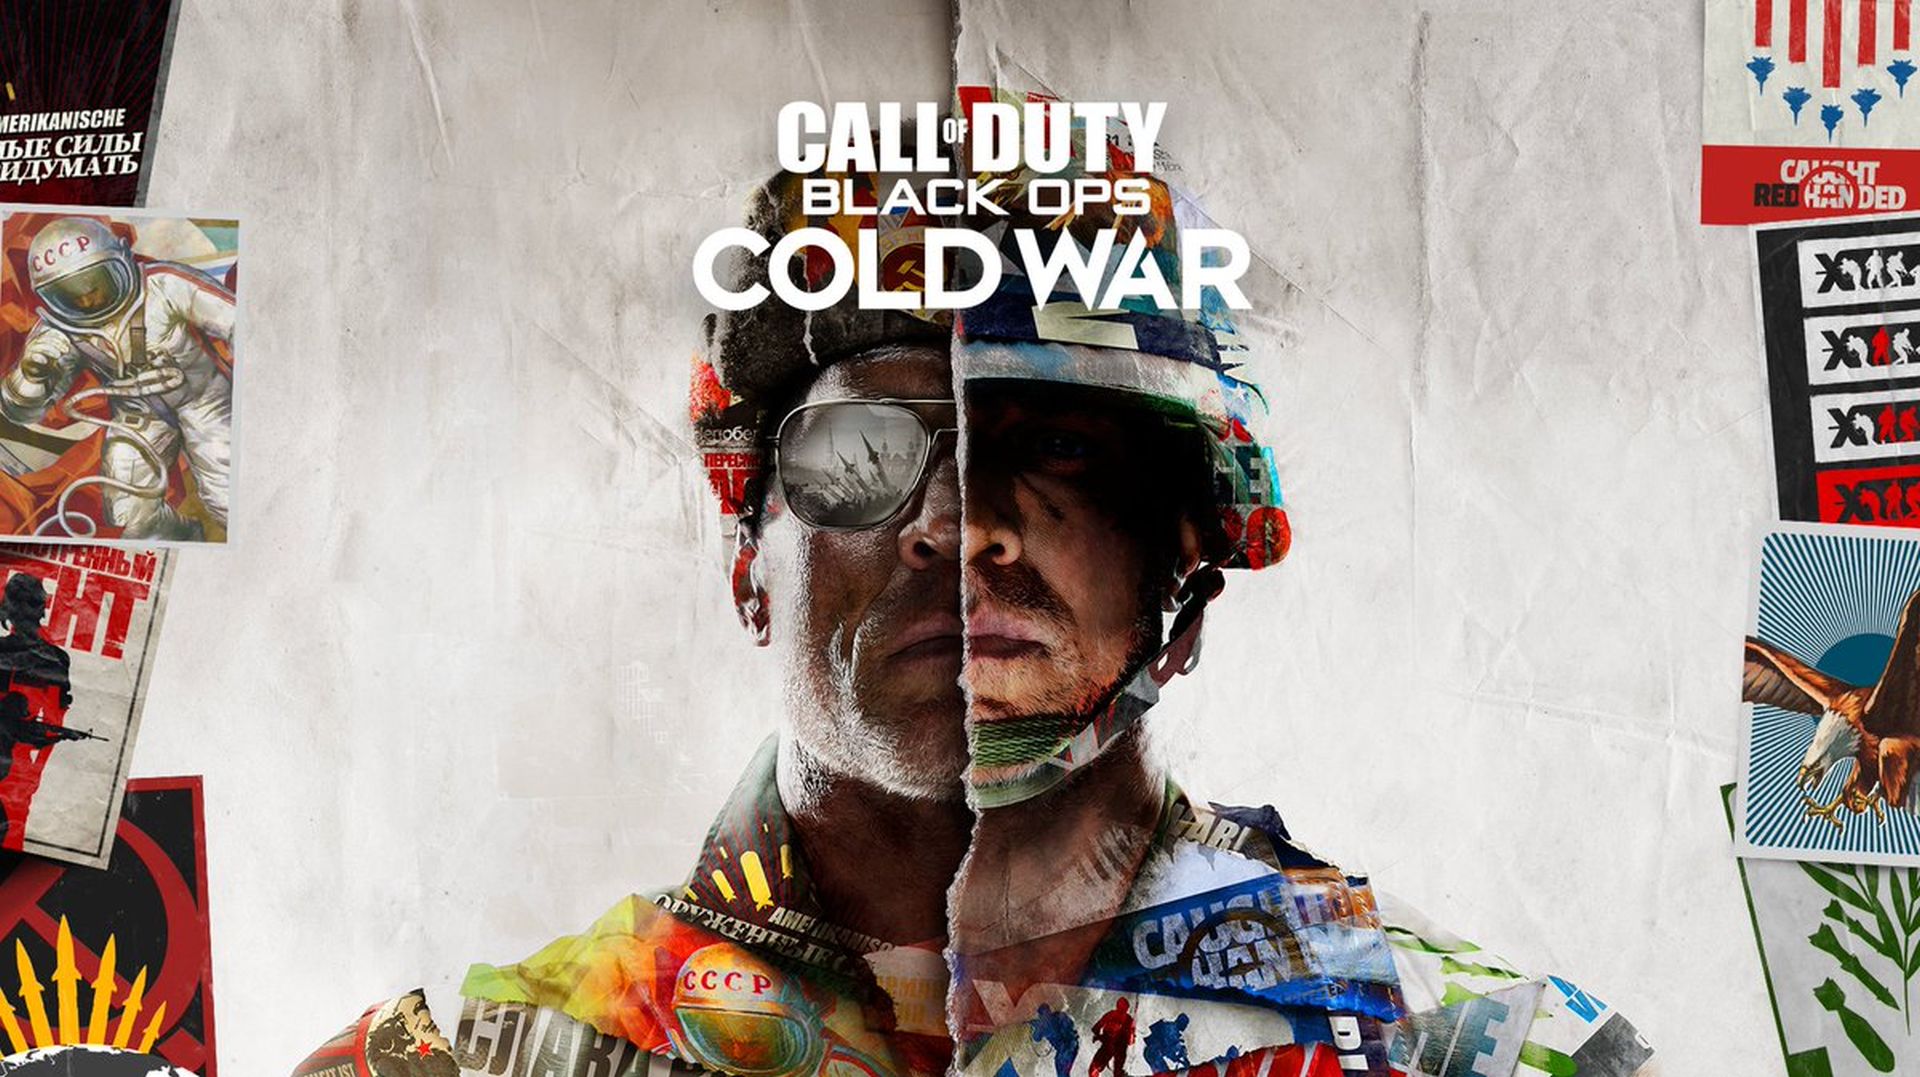 Call Of Duty: Black Ops - សង្រ្គាមត្រជាក់នឹងបញ្ចូលគ្នាហើយ "ដកដង្ហើមជីវិតបន្ថែមទៀត" ចូលទៅក្នុង Warzone